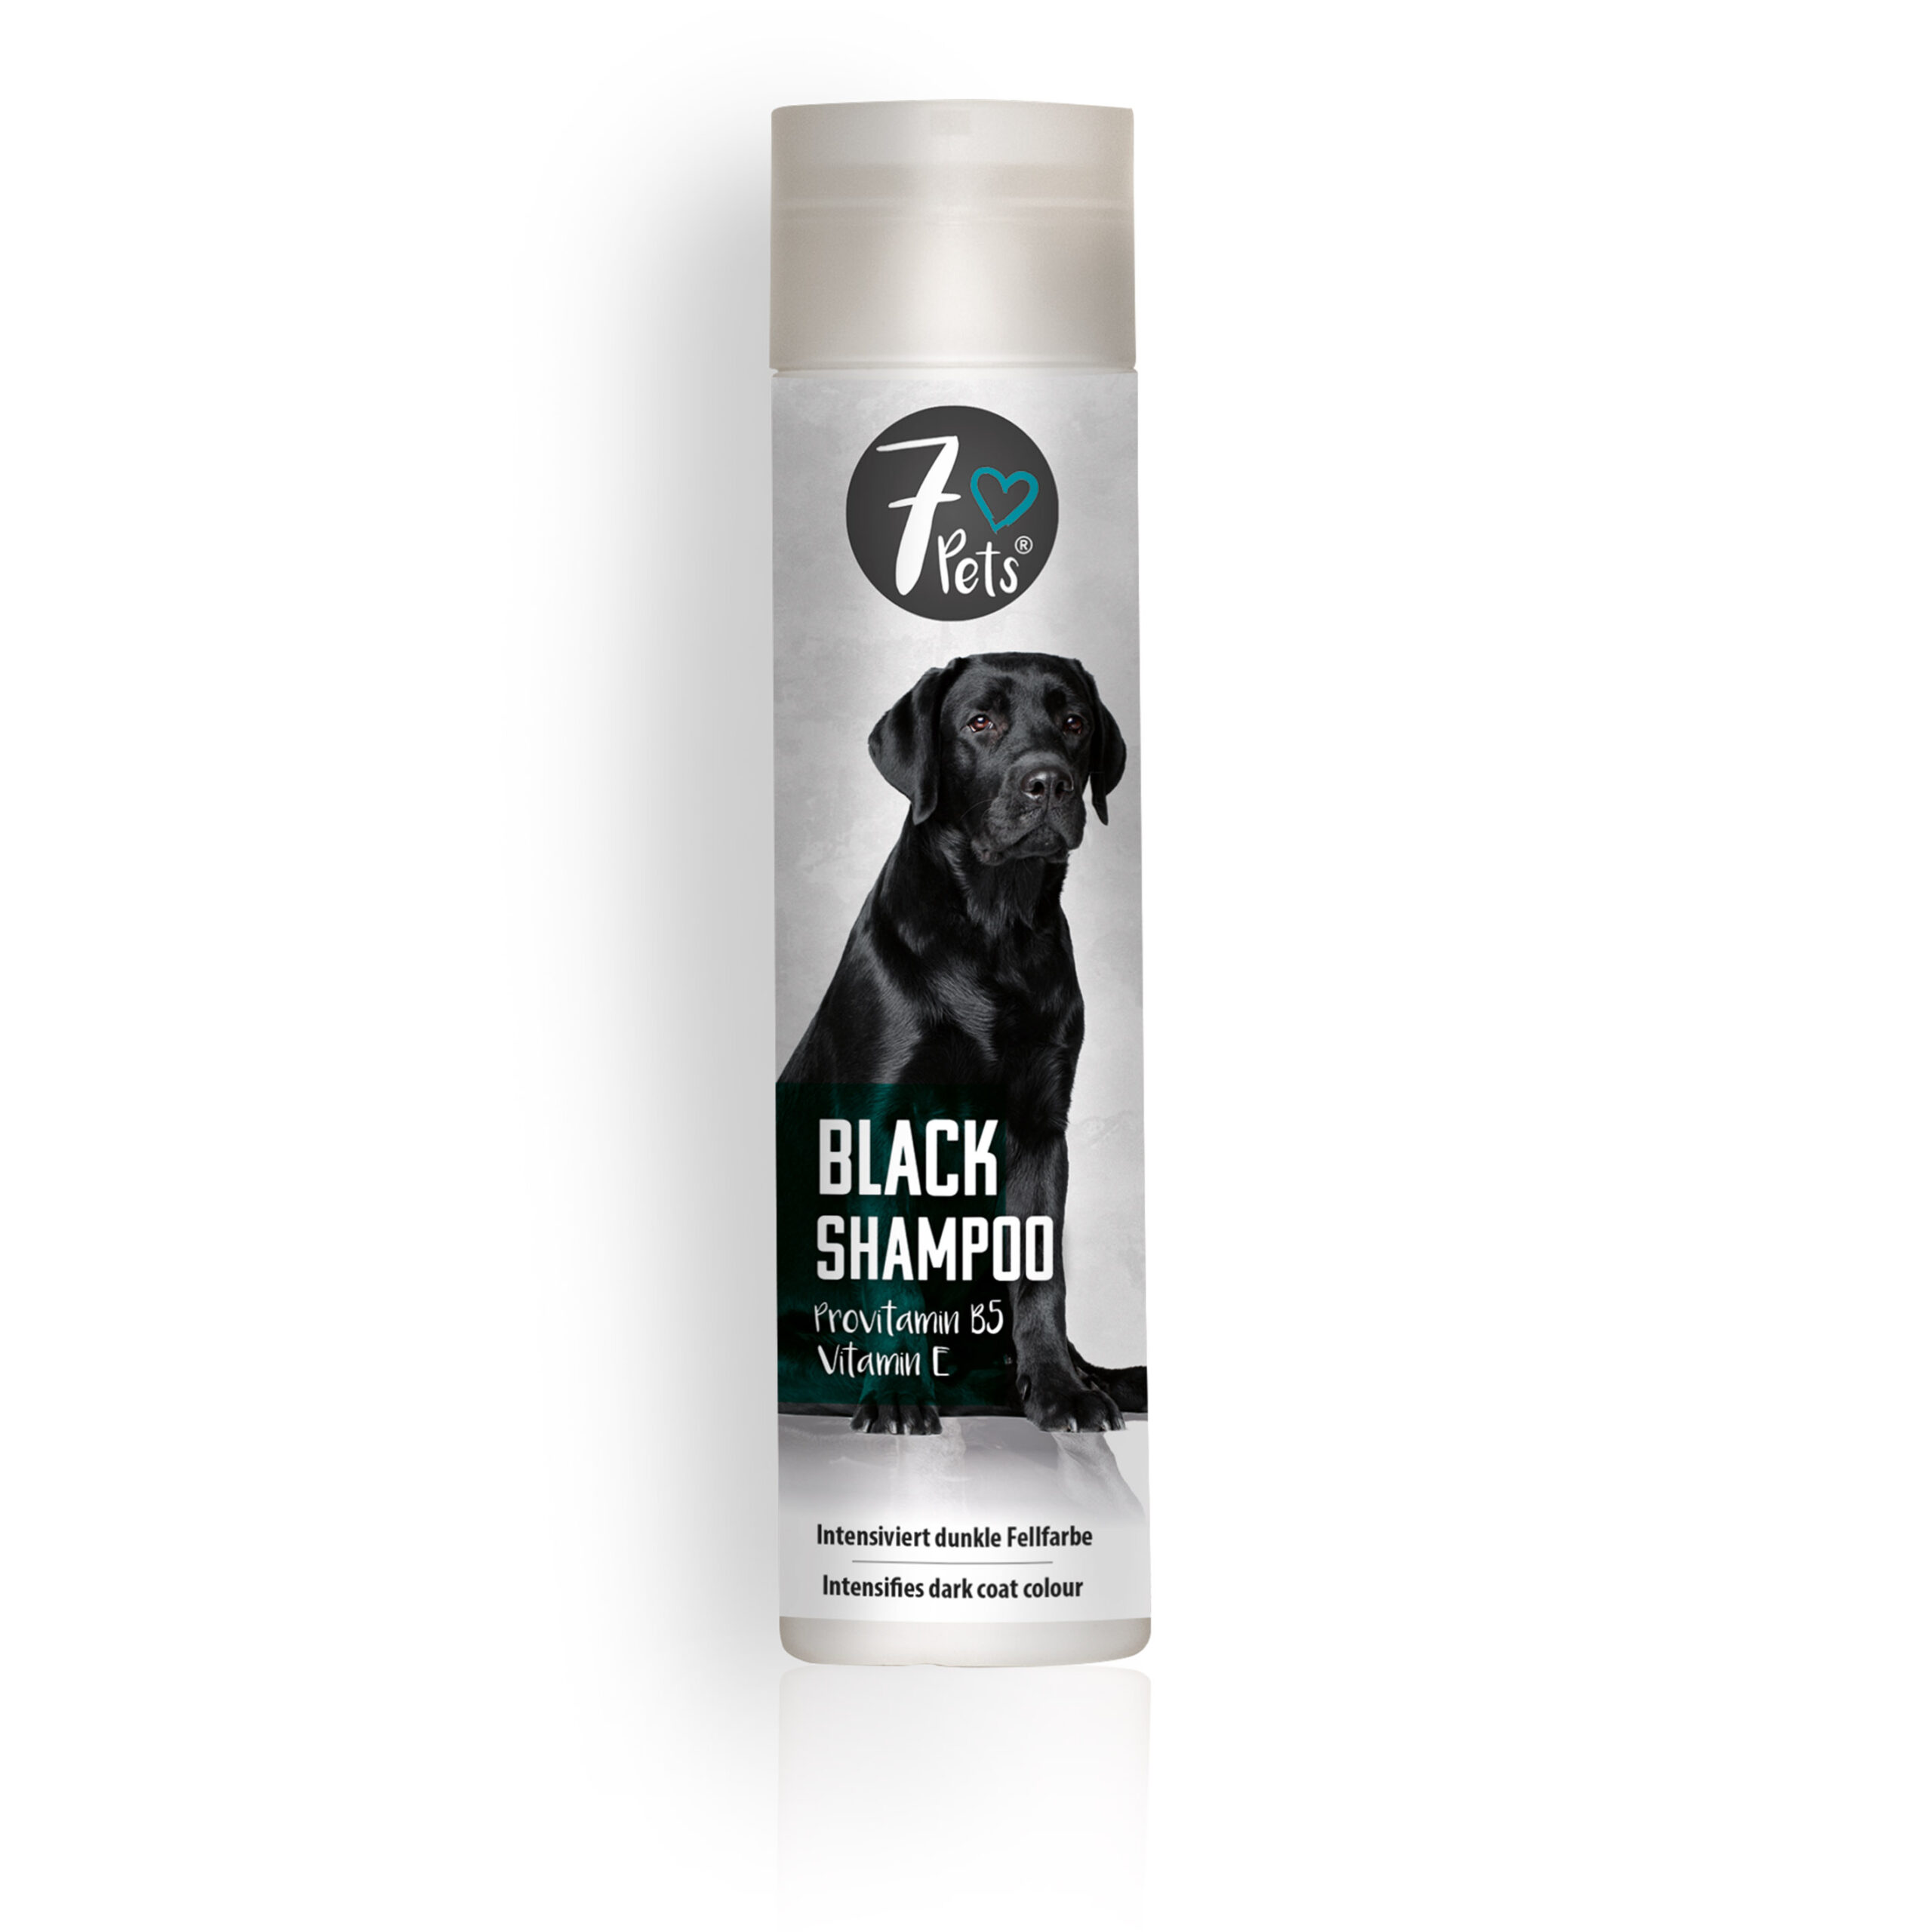 7 ♥ Pets BLACK SHAMPOO mit Provitamin B5 & Vitamin E